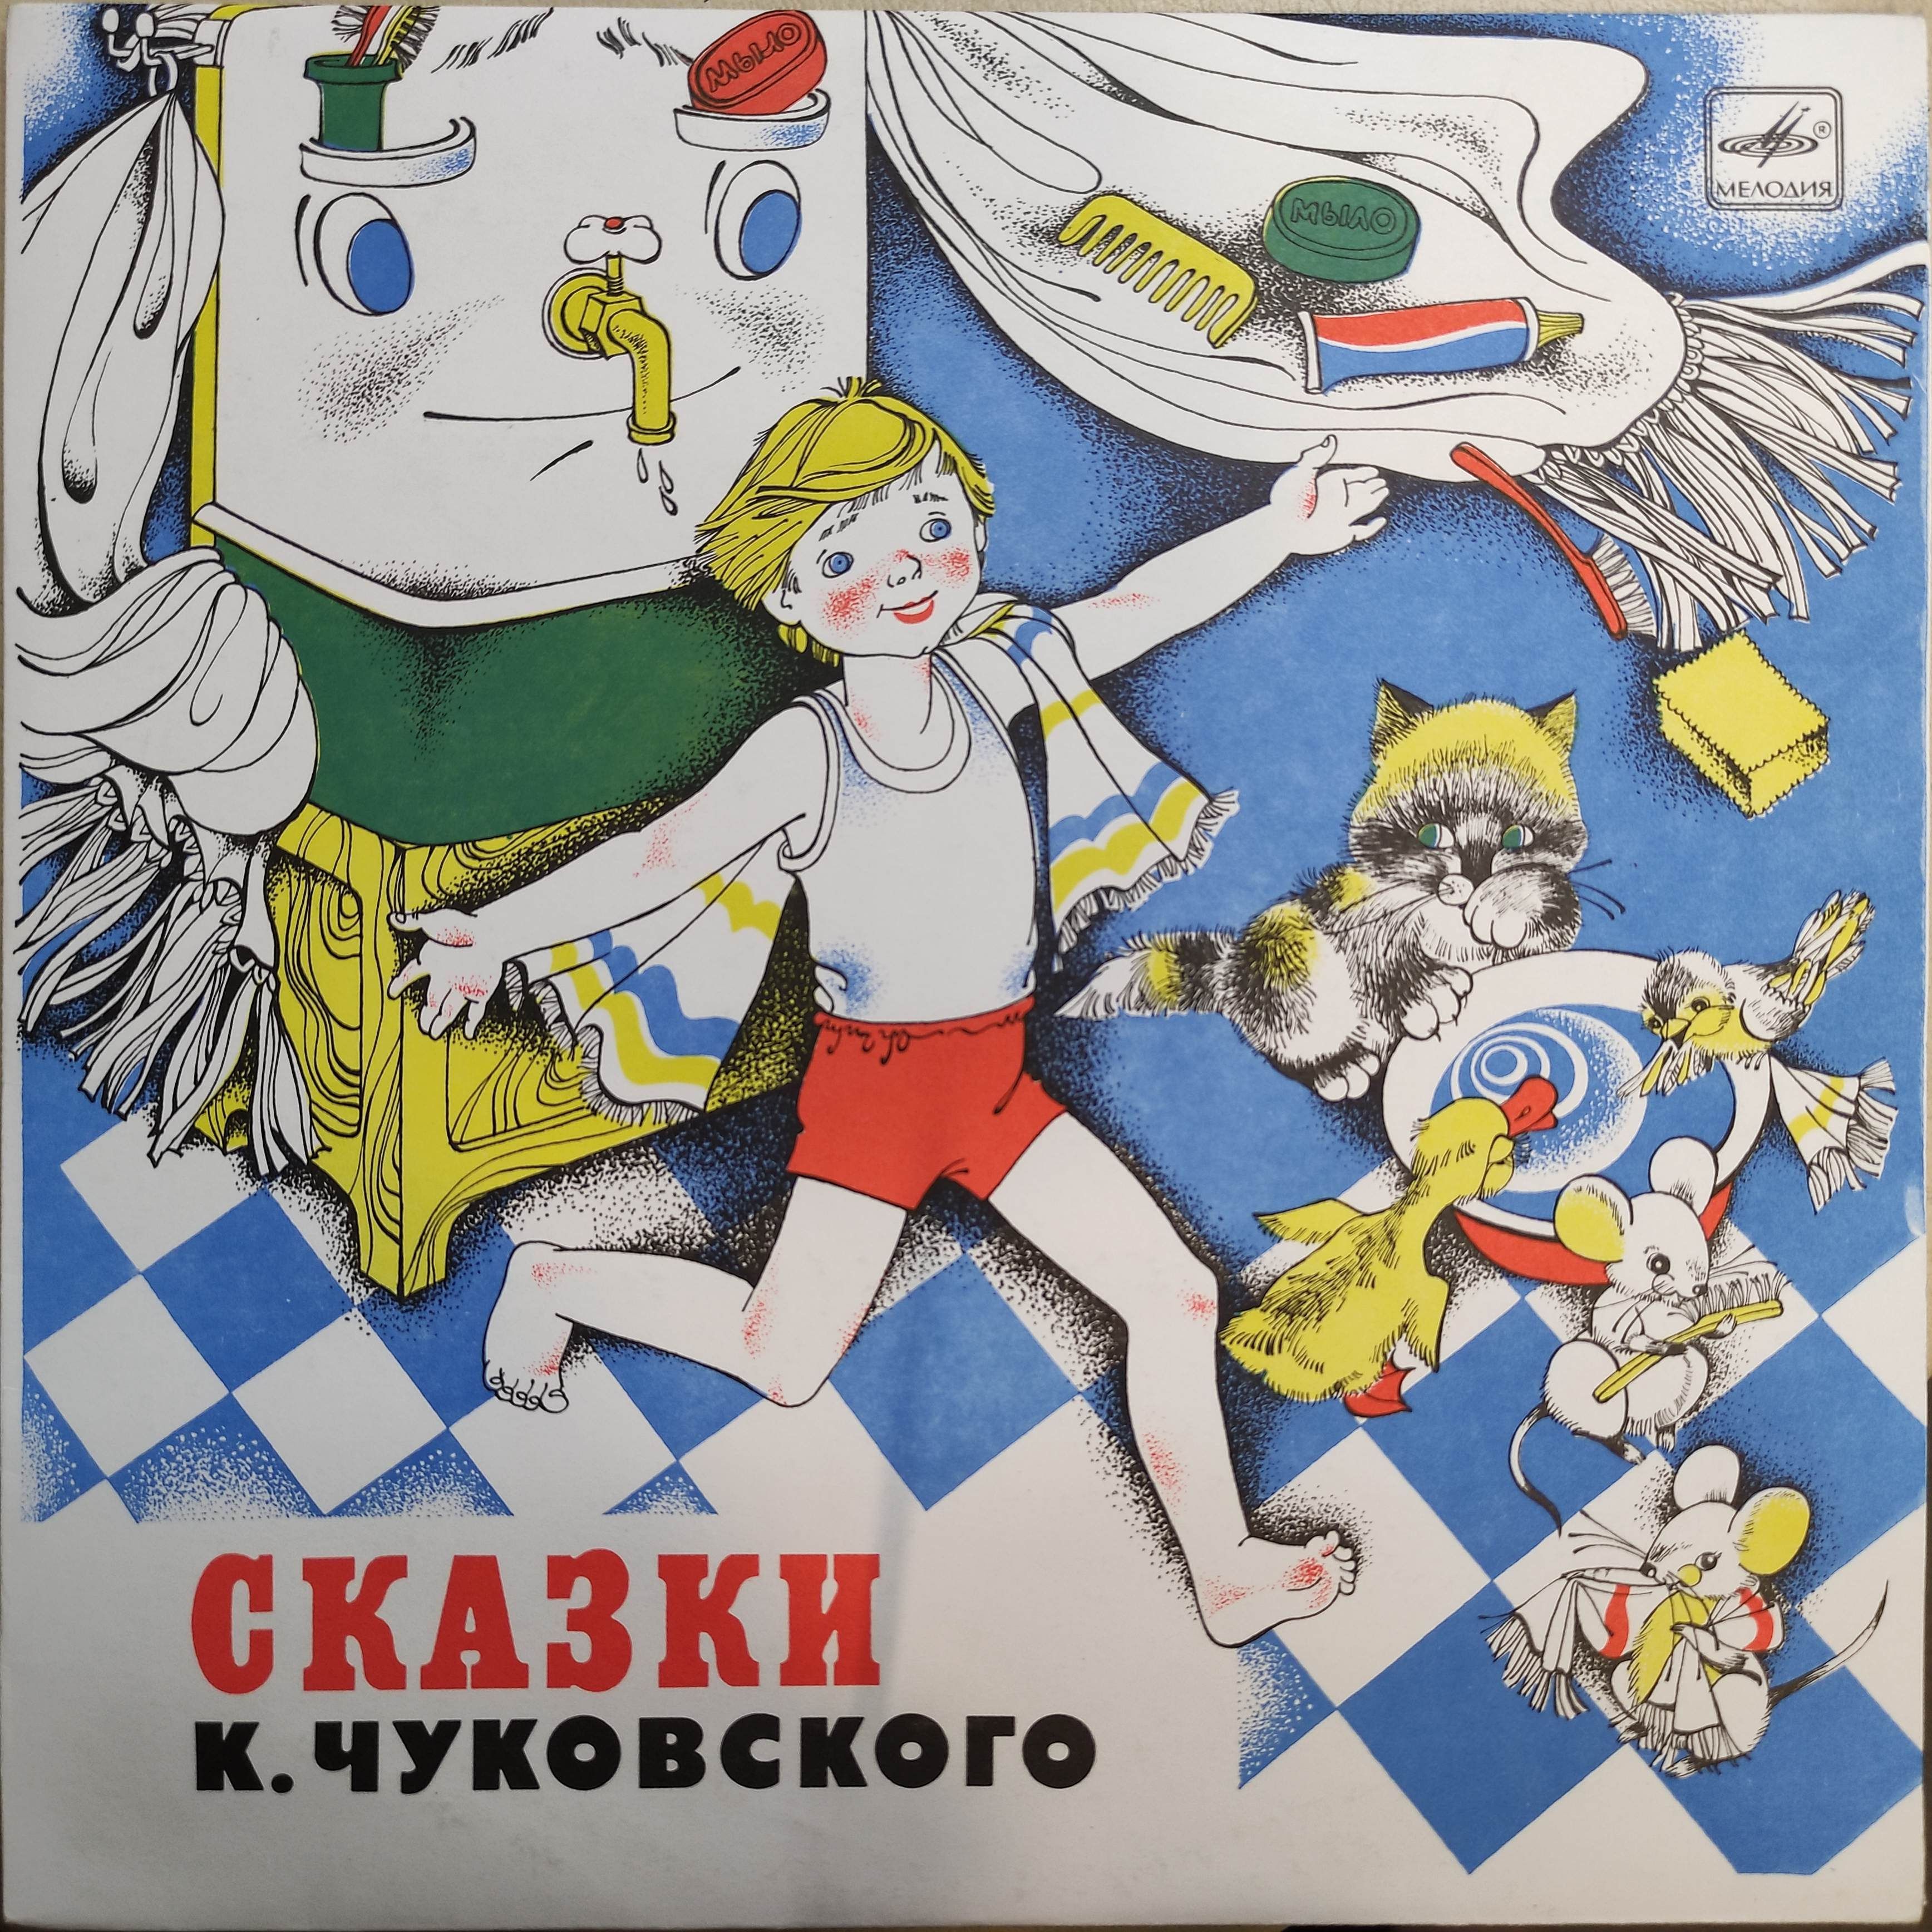 Аудиокнига детям постарше. Пластинка сказки Корнея Чуковского.